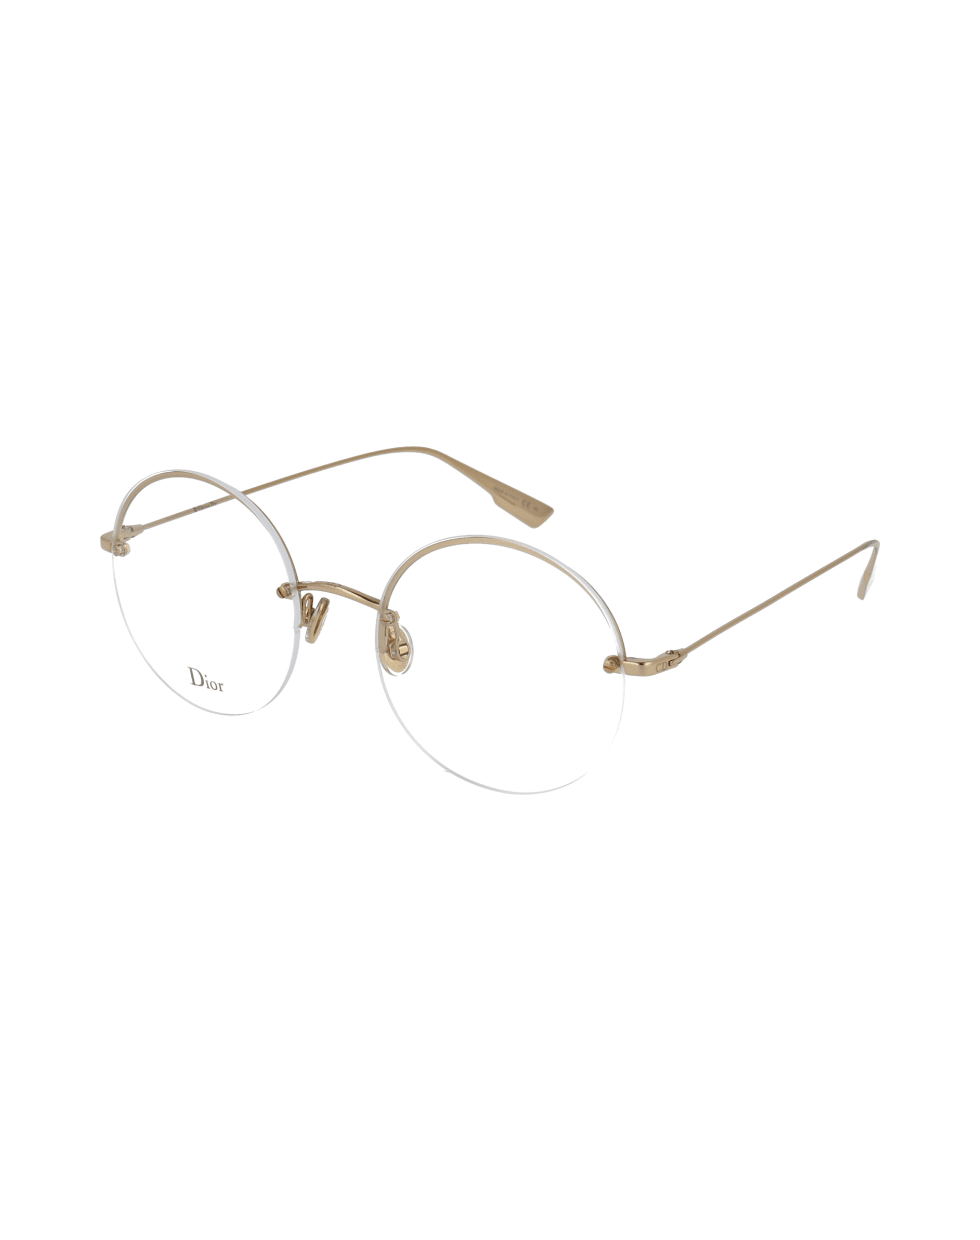 Dior Eyewear Stellaireo12 Glasses - J5G GOLD